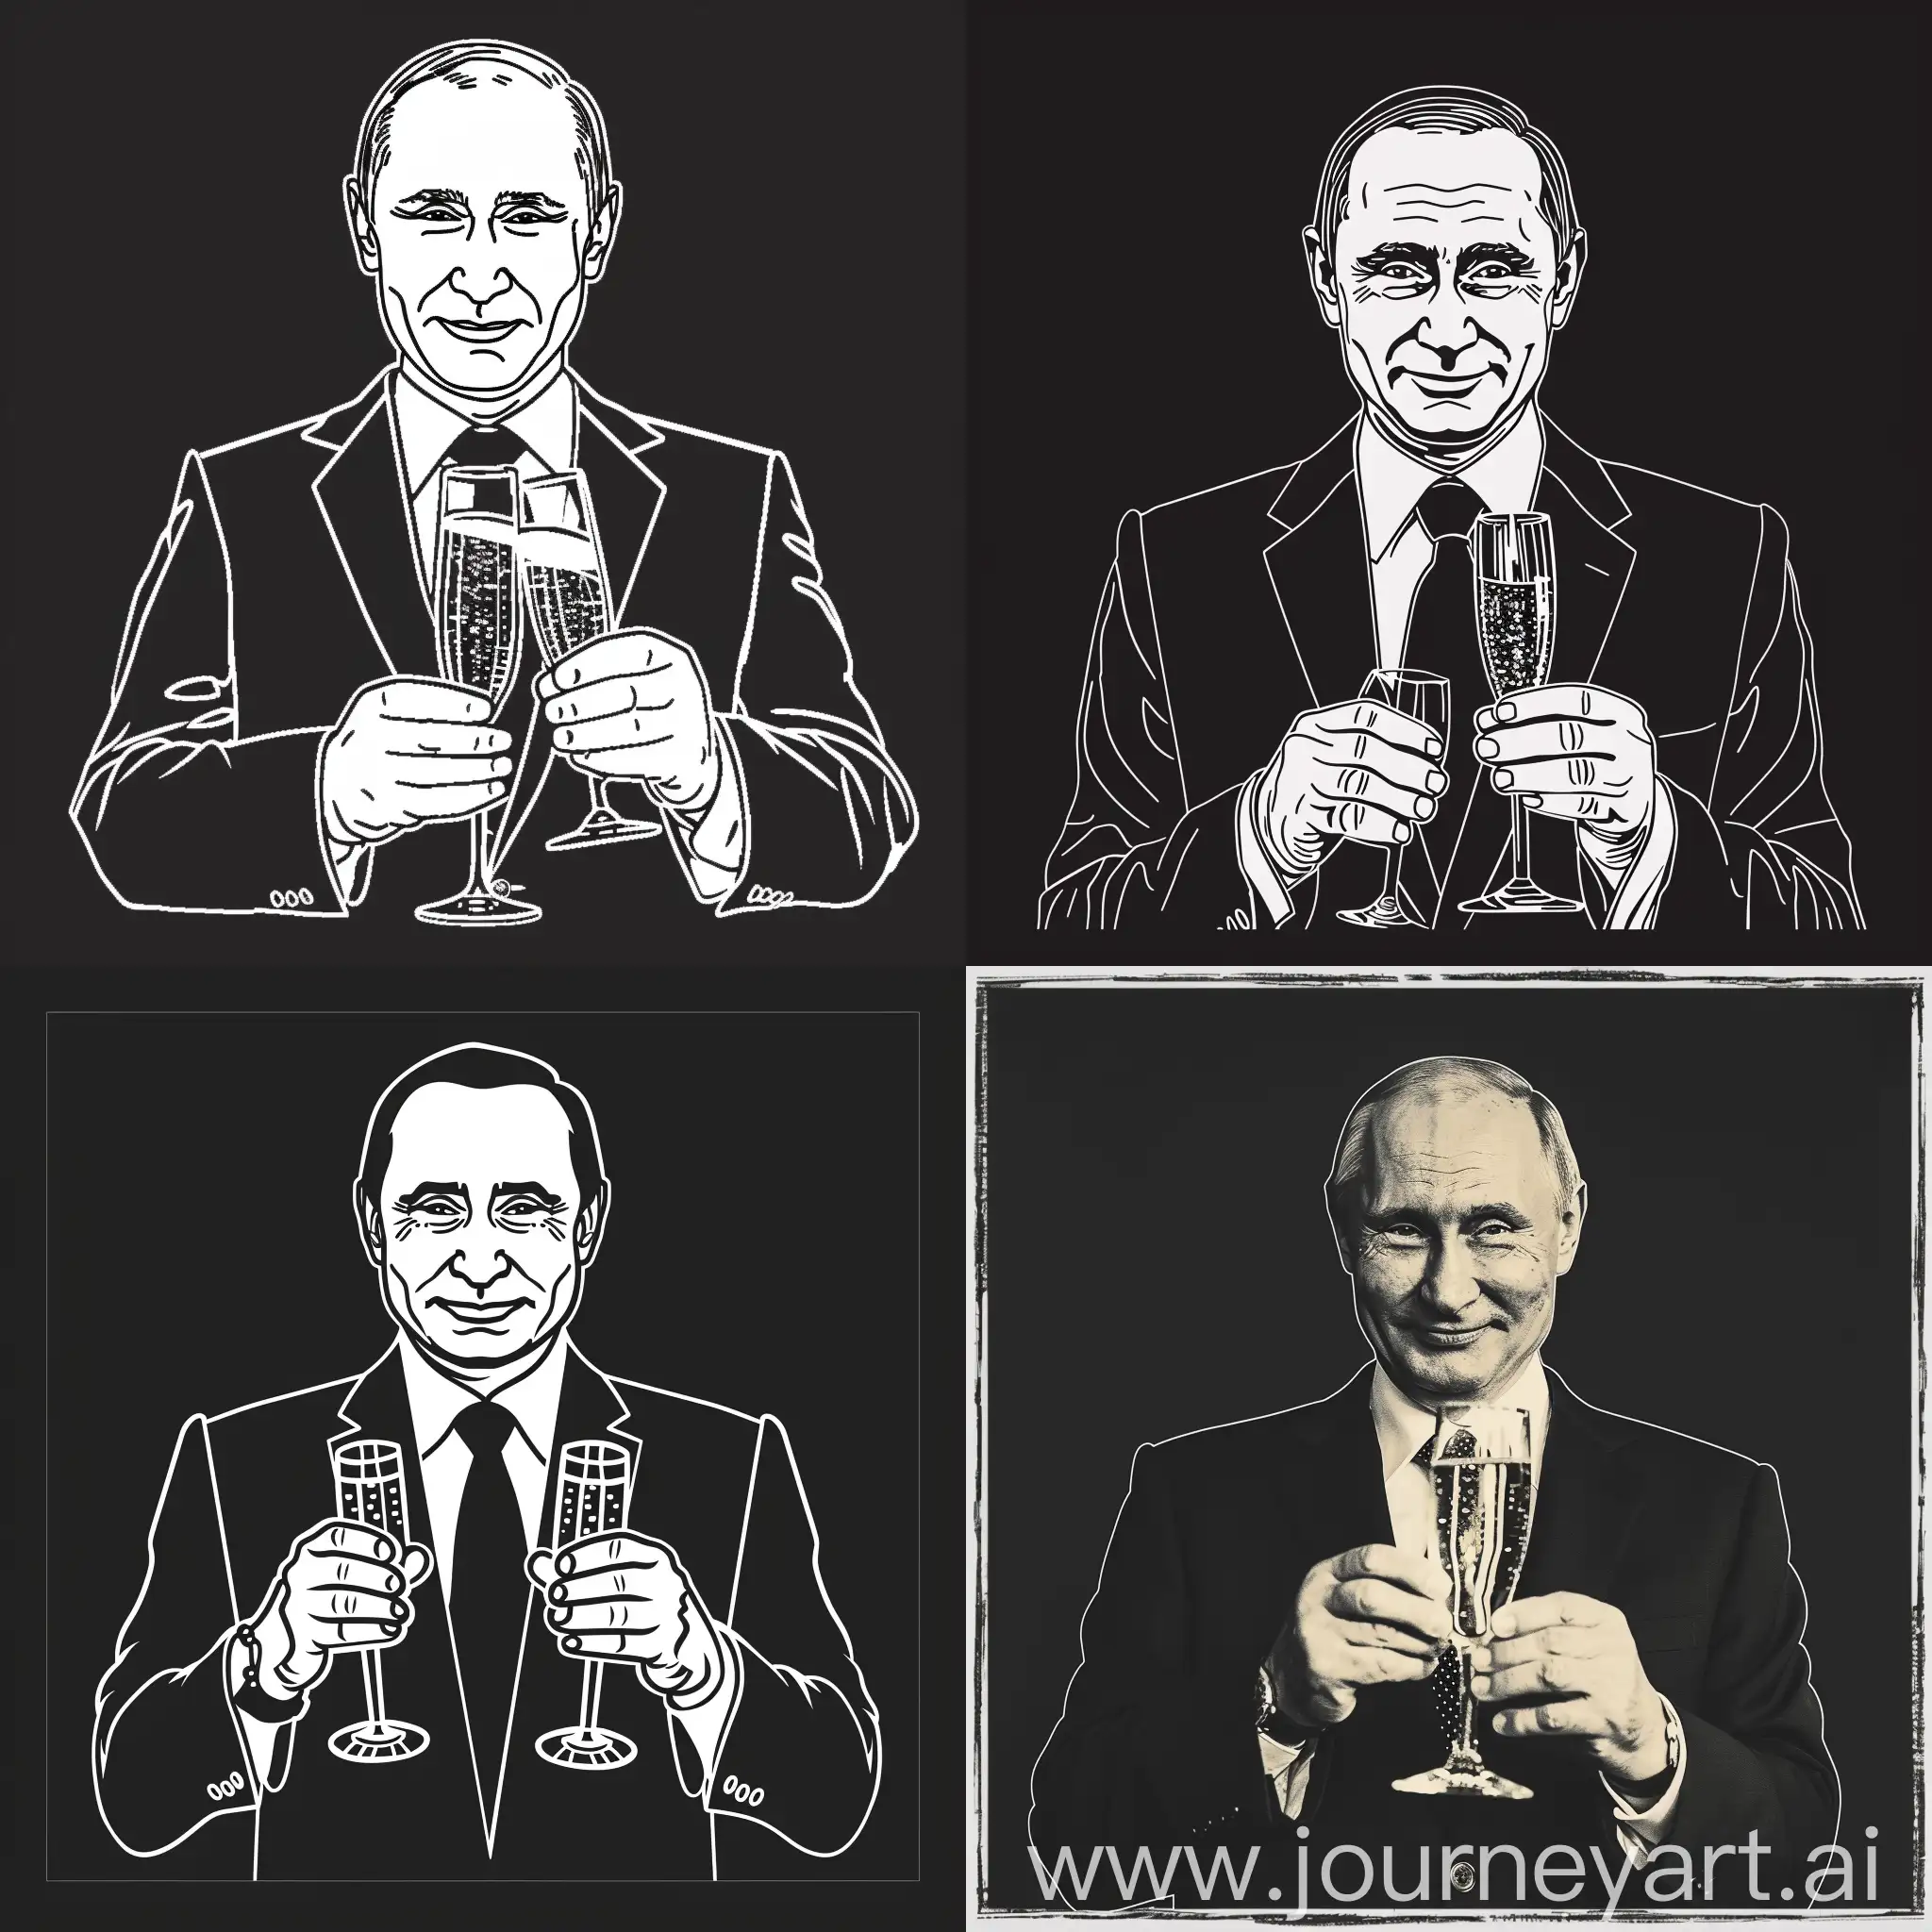 Vladimir-Putin-Smiles-with-Champagne-TelegramStyle-Portrait